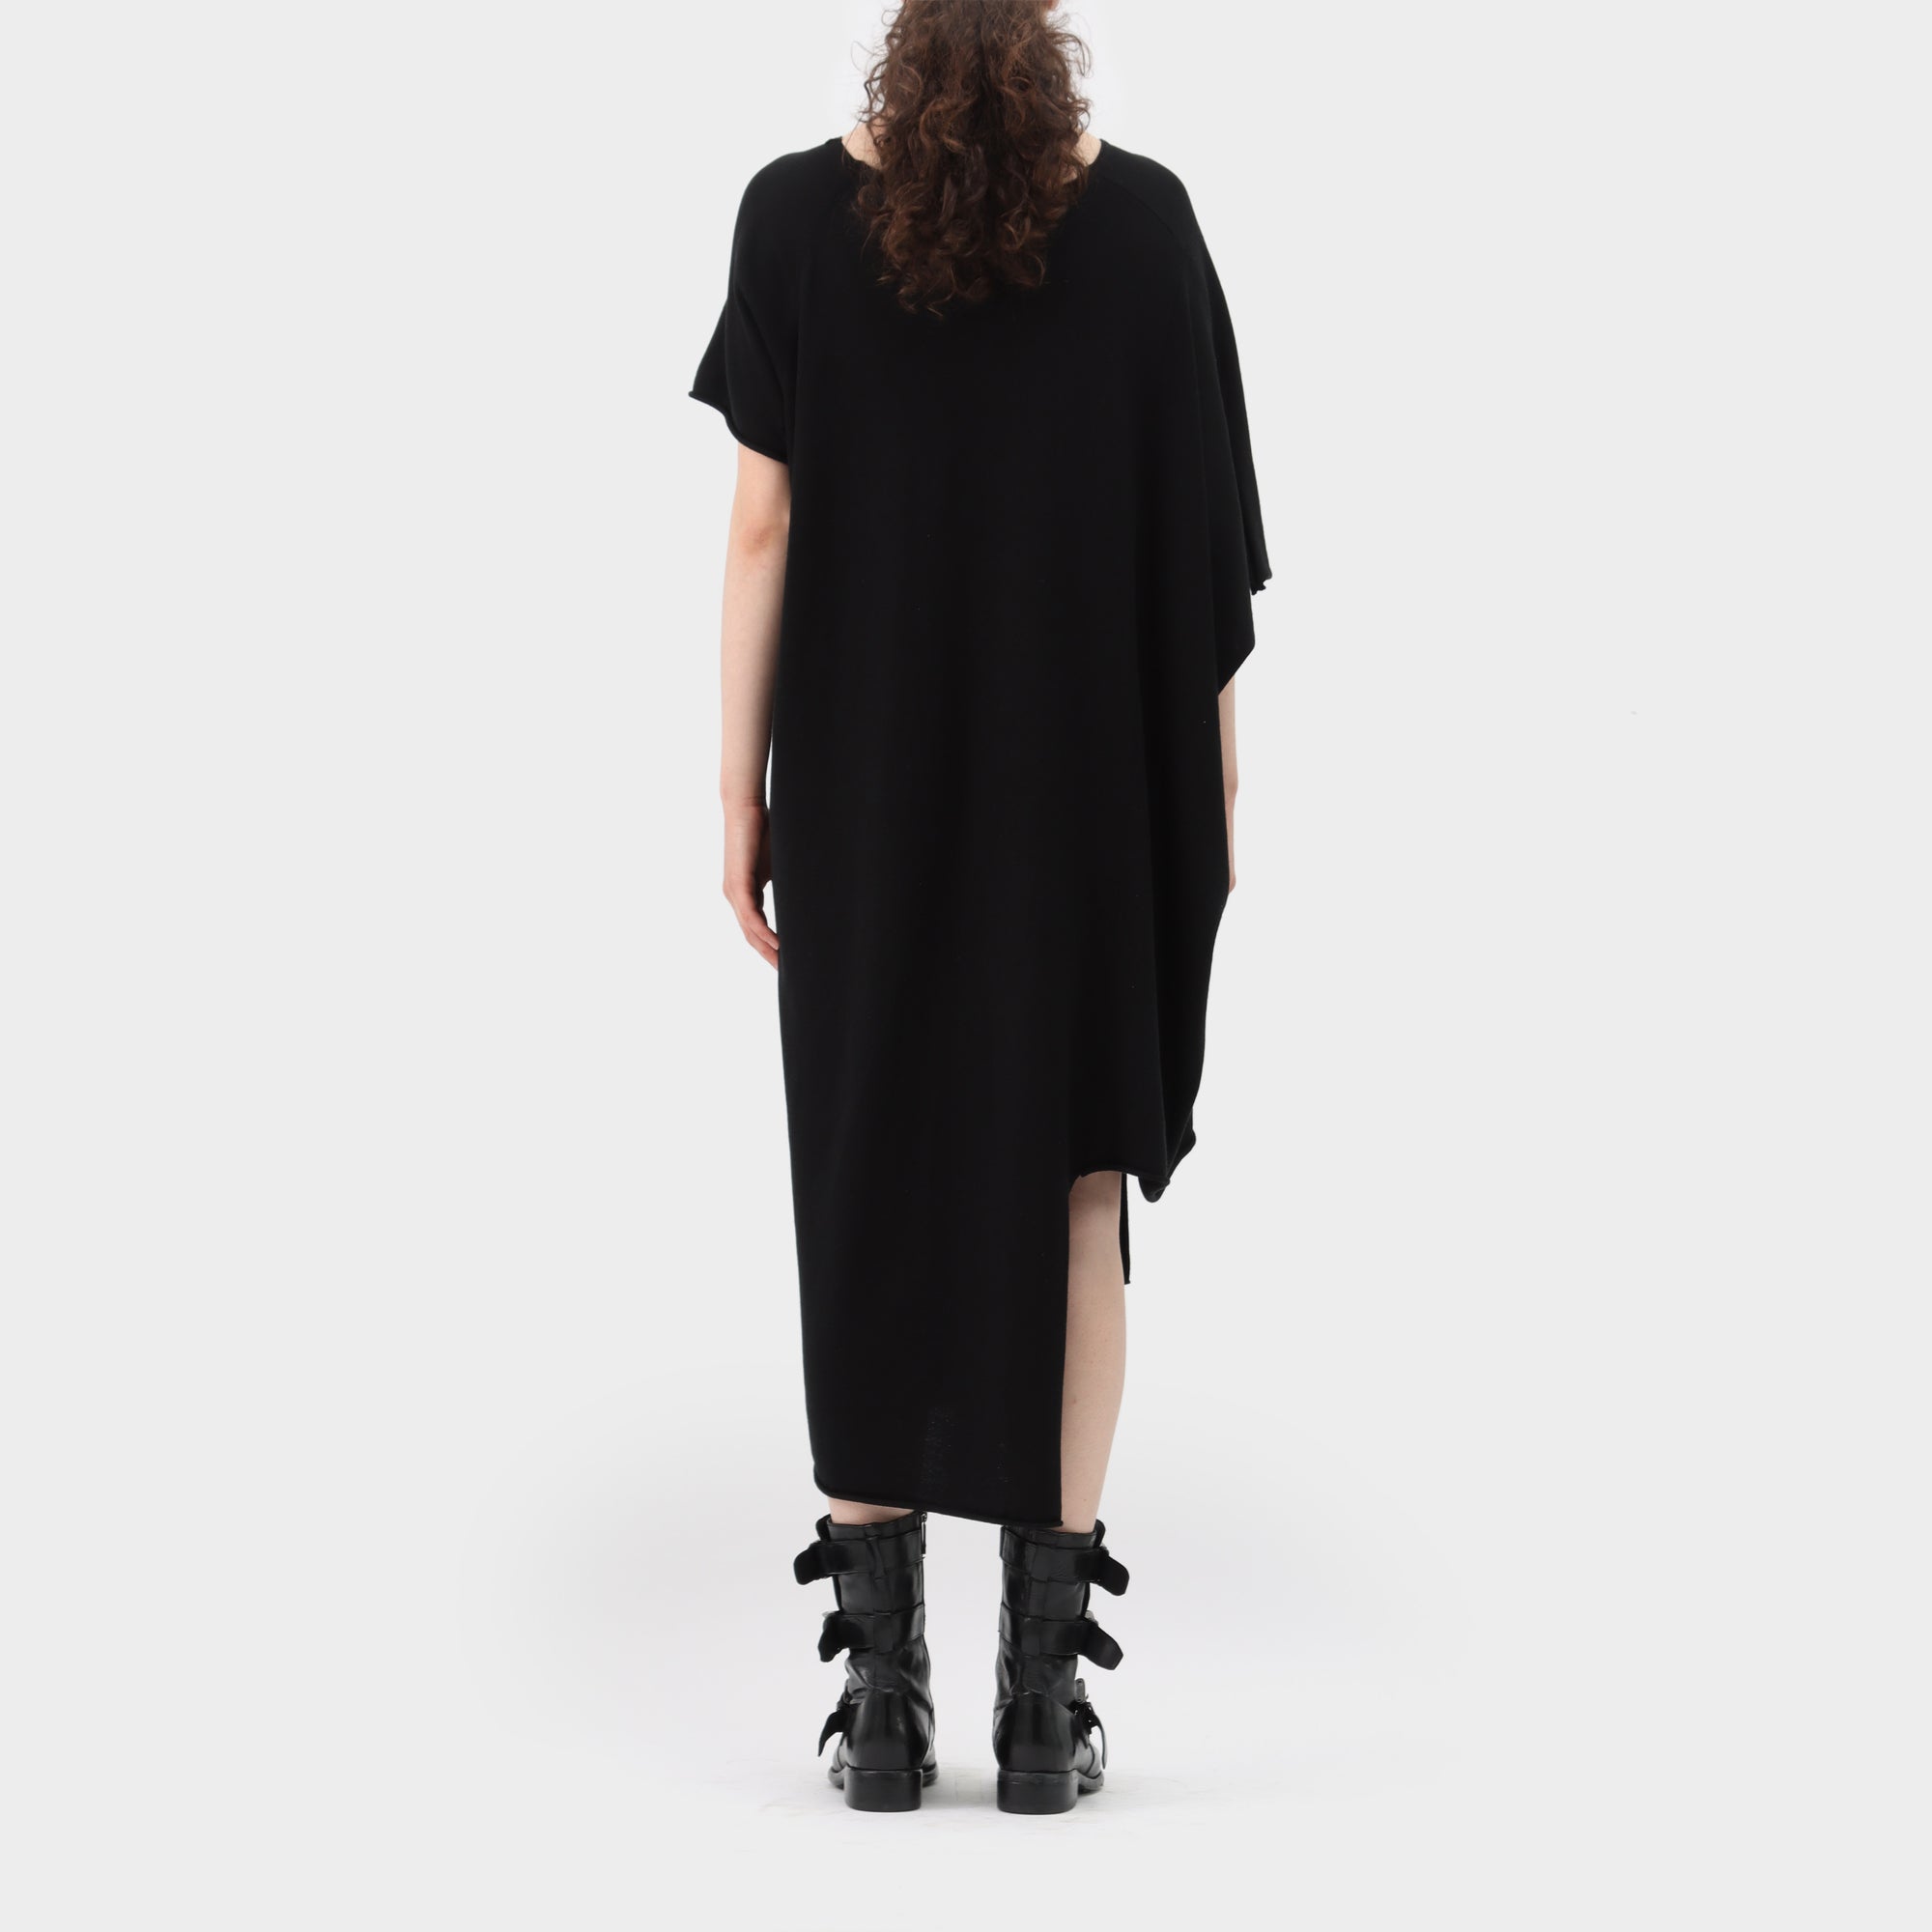 Rismat by Y's Asymmetrical Knit Dress